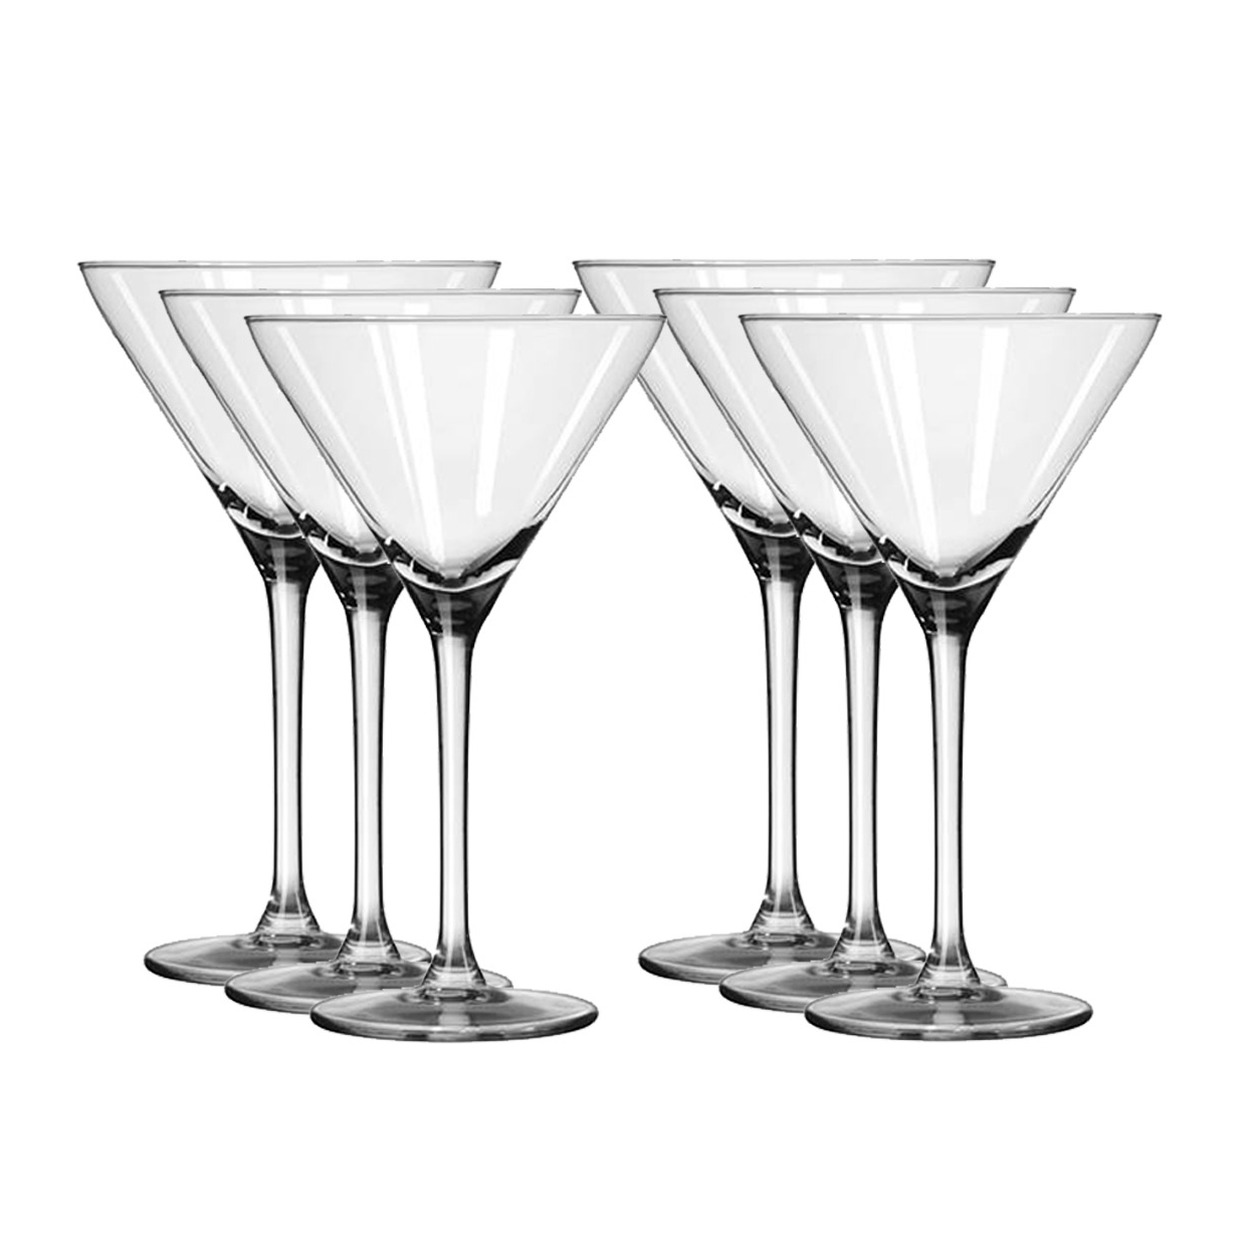 6x Cocktail-Martini glazen transparant 260 ml Specials